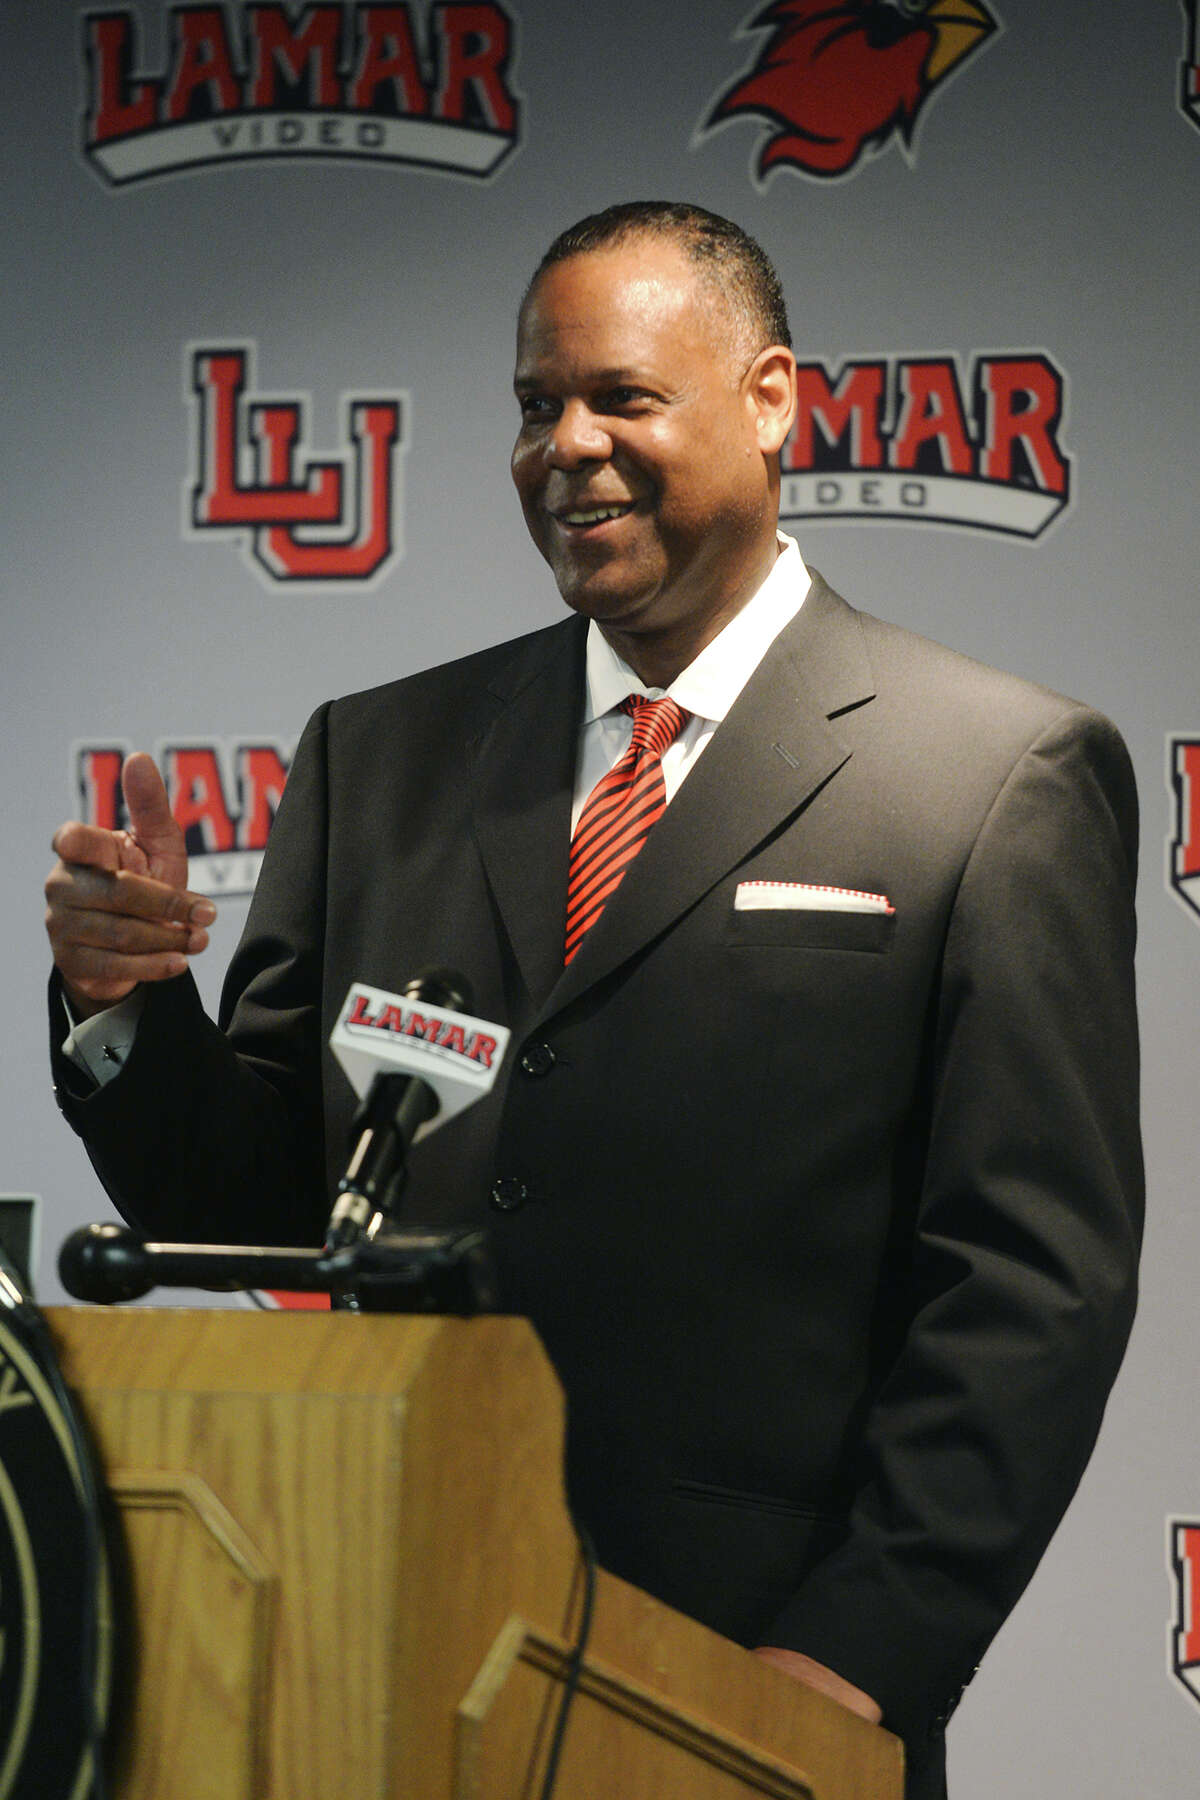 Price named Lamar head coach